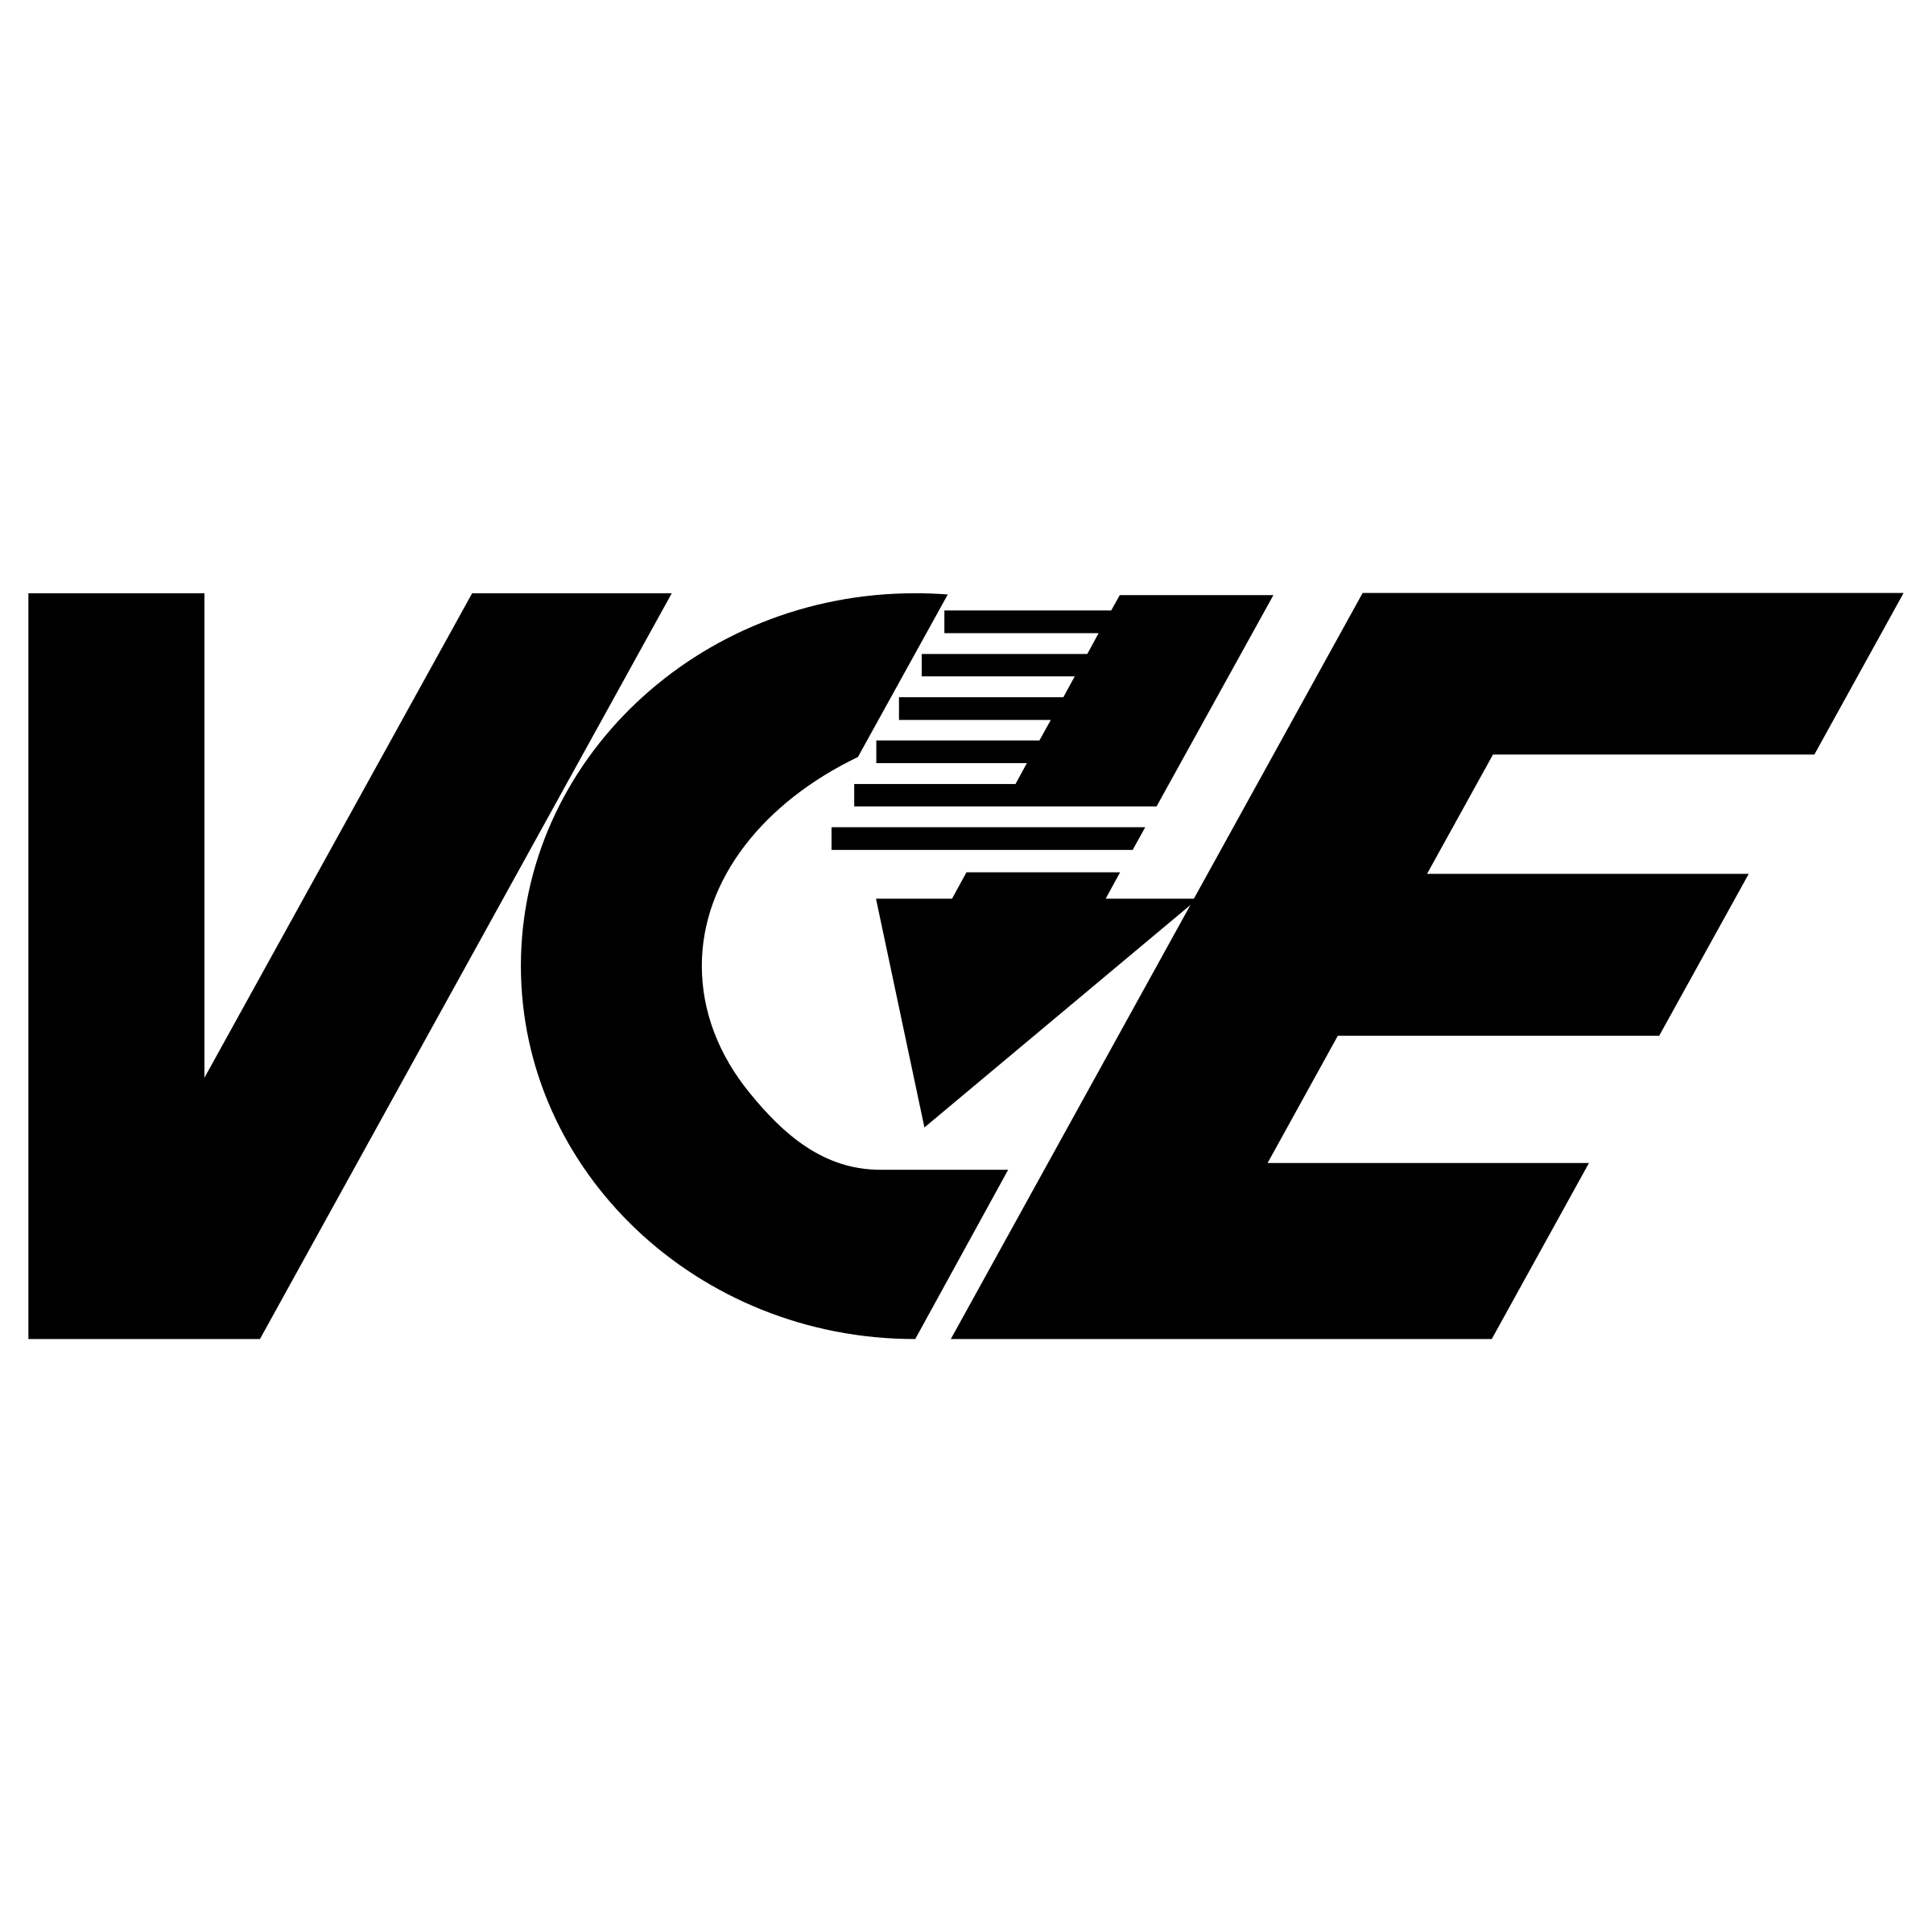 VCE Logo - VCE Logo PNG Transparent & SVG Vector